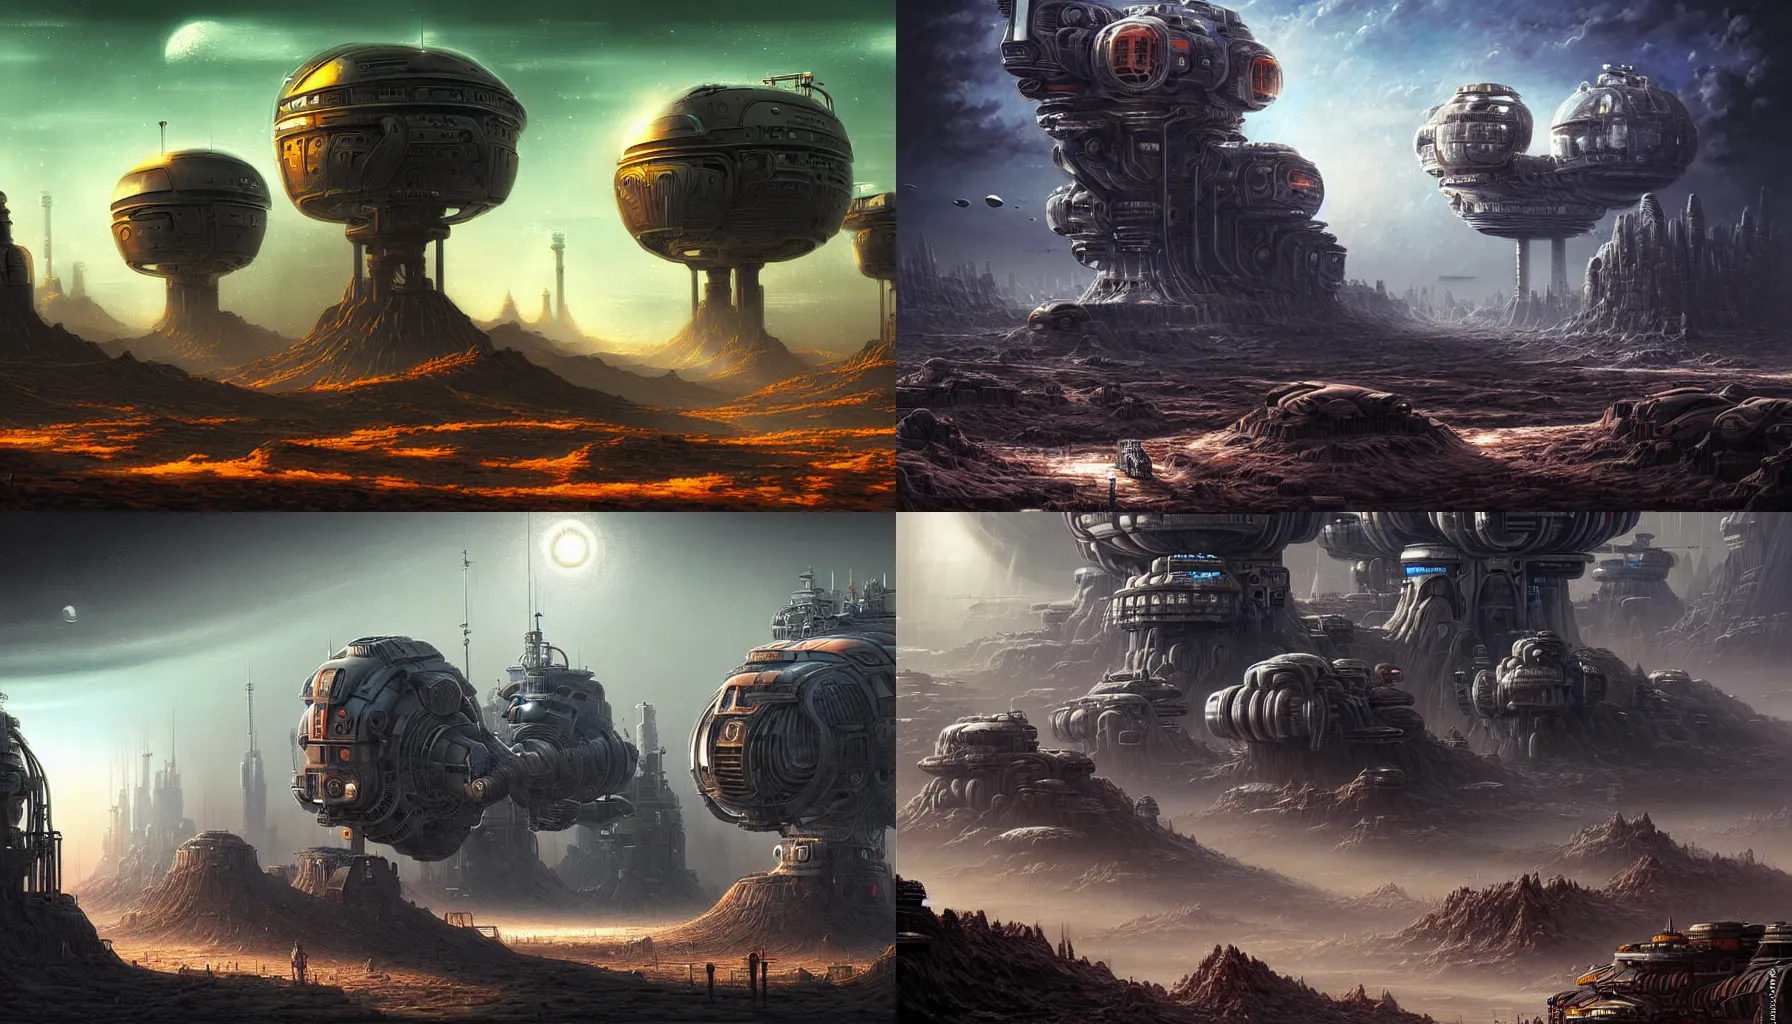 Prompt: machine city on a distant planet by dariusz zawadzki, detailed, masterpiece, atmospheric